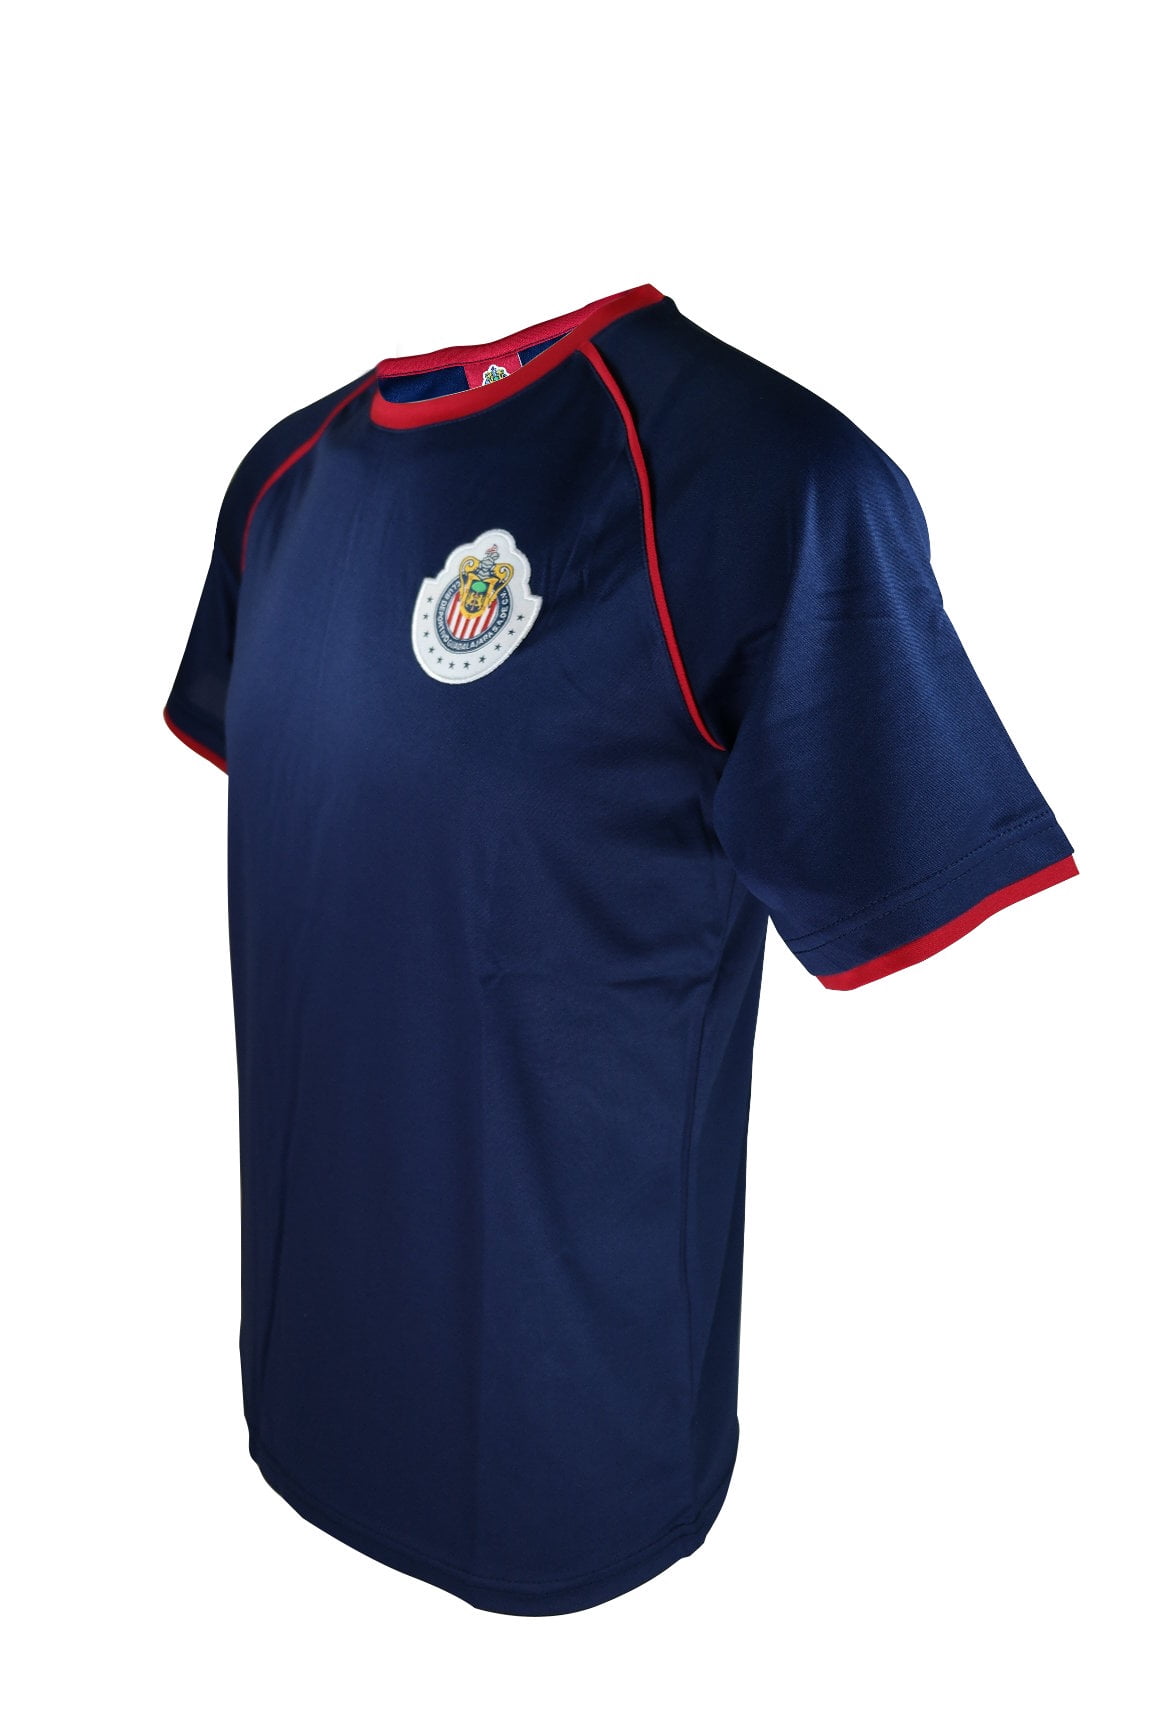 RhinoxGroup Adult Chivas De Guadalajara Official Soccer Poly Jersey Shirt 006